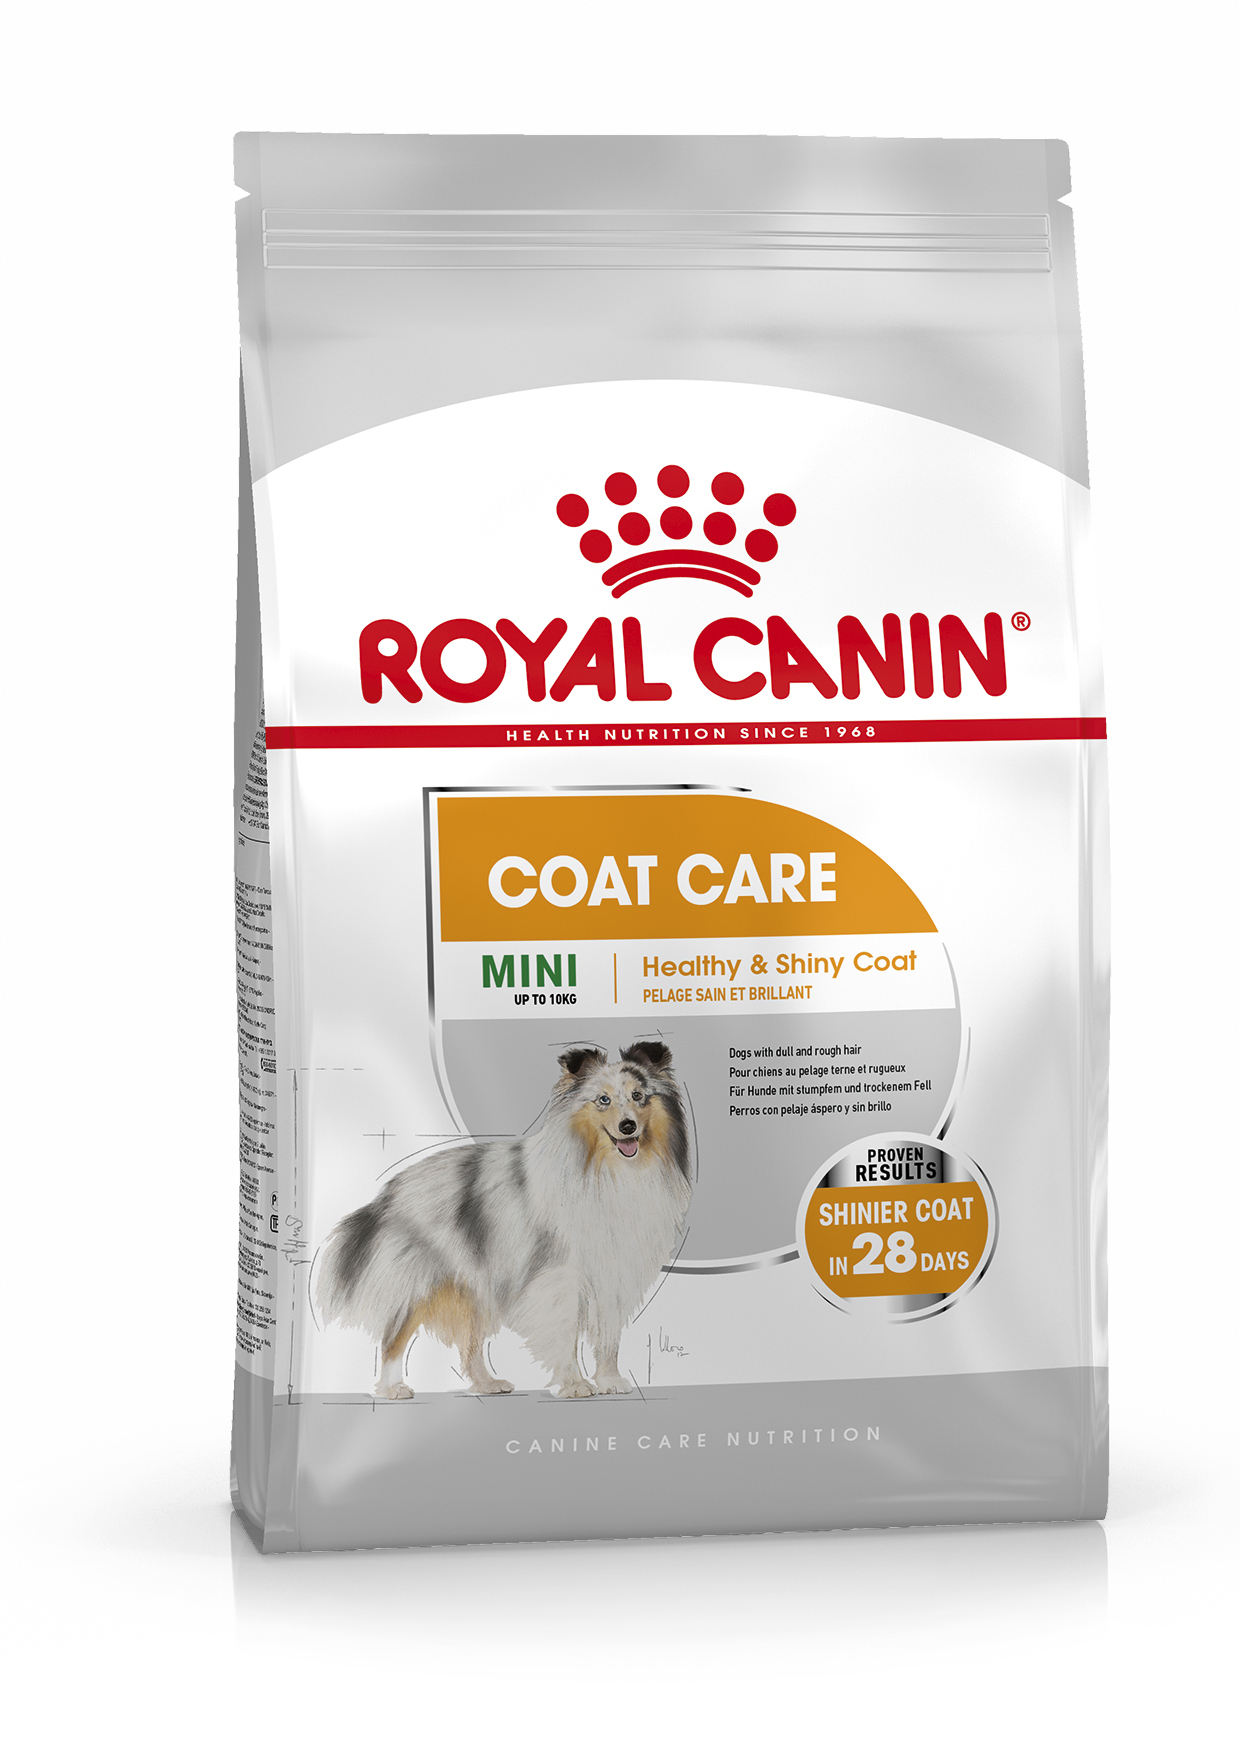 Royal Canin Coat Care Mini para perros pequeños